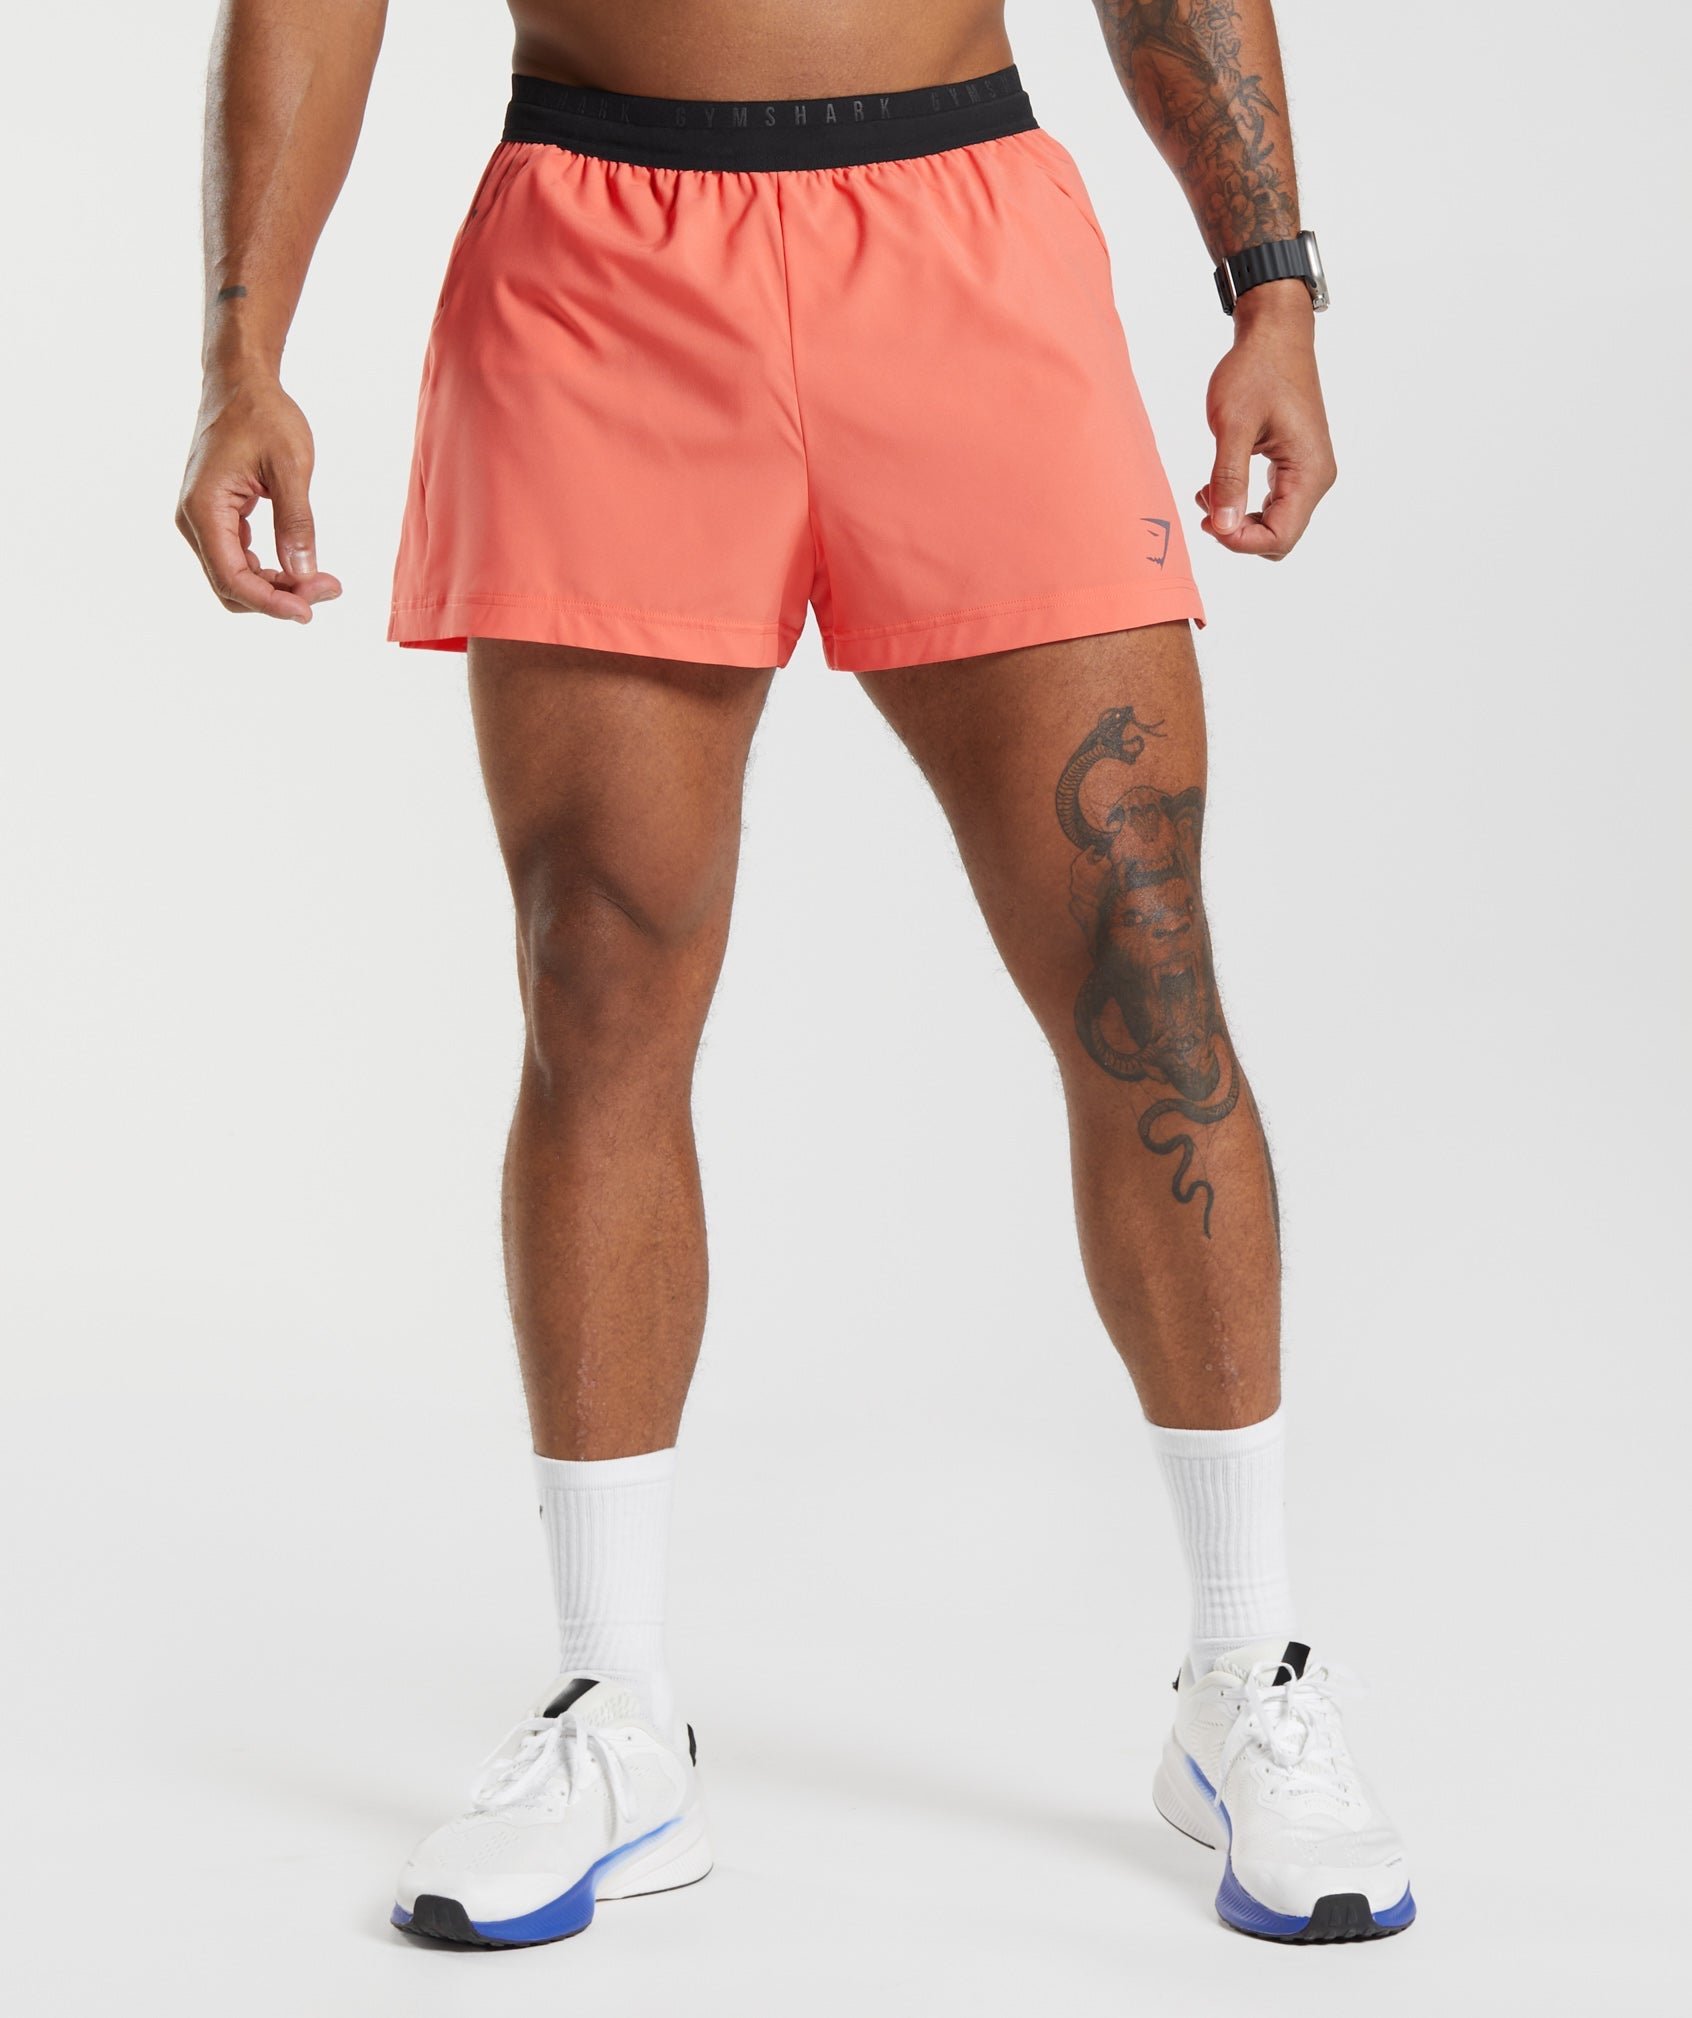 pinrepin.com  Mens workout clothes, Mens running clothes, Mens sportswear